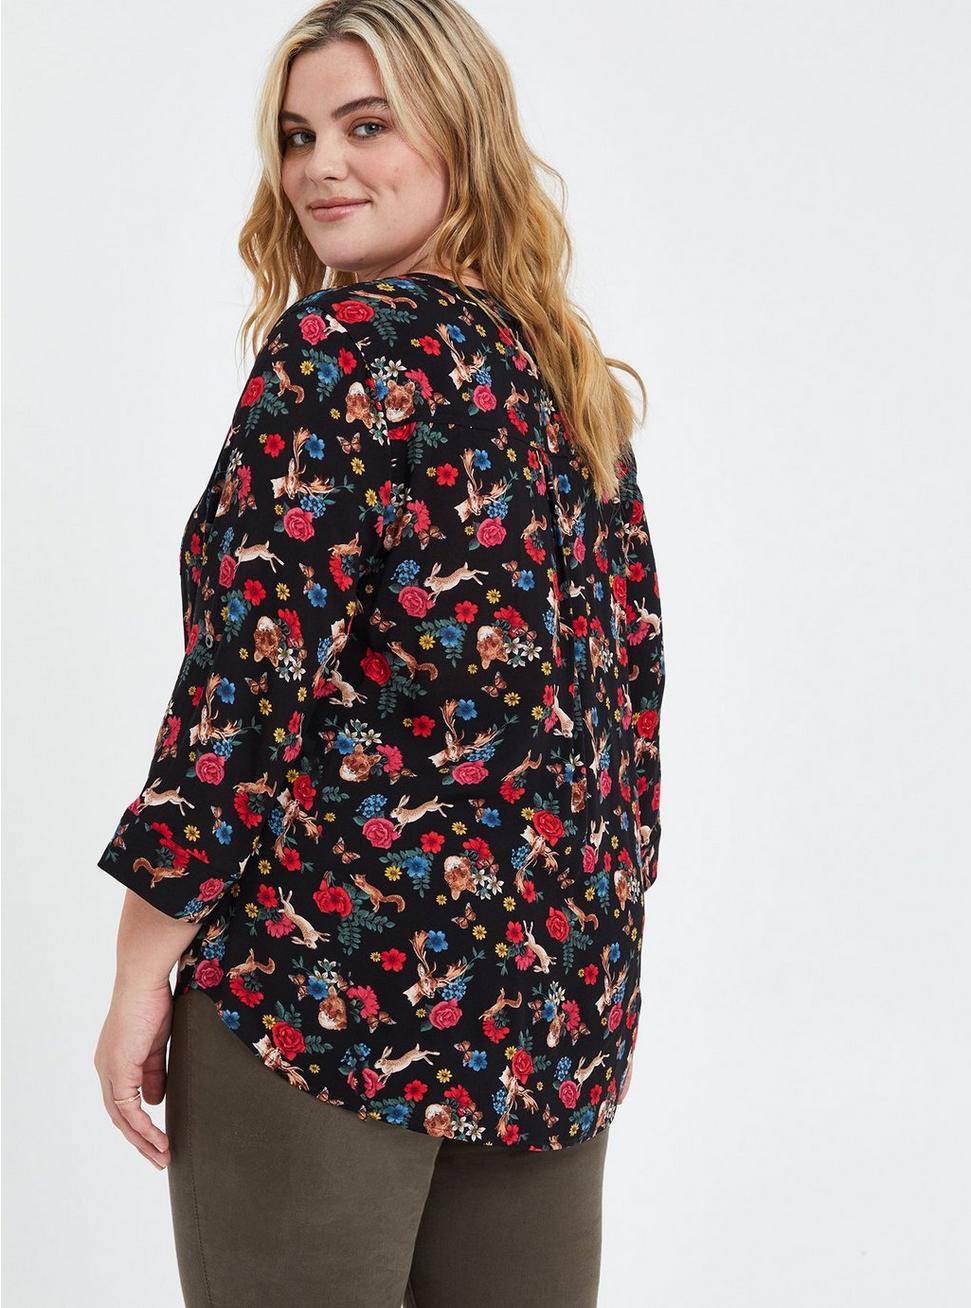 Plus Size - Harper Pullover Blouse - Challis Animal & Floral Black - Torrid